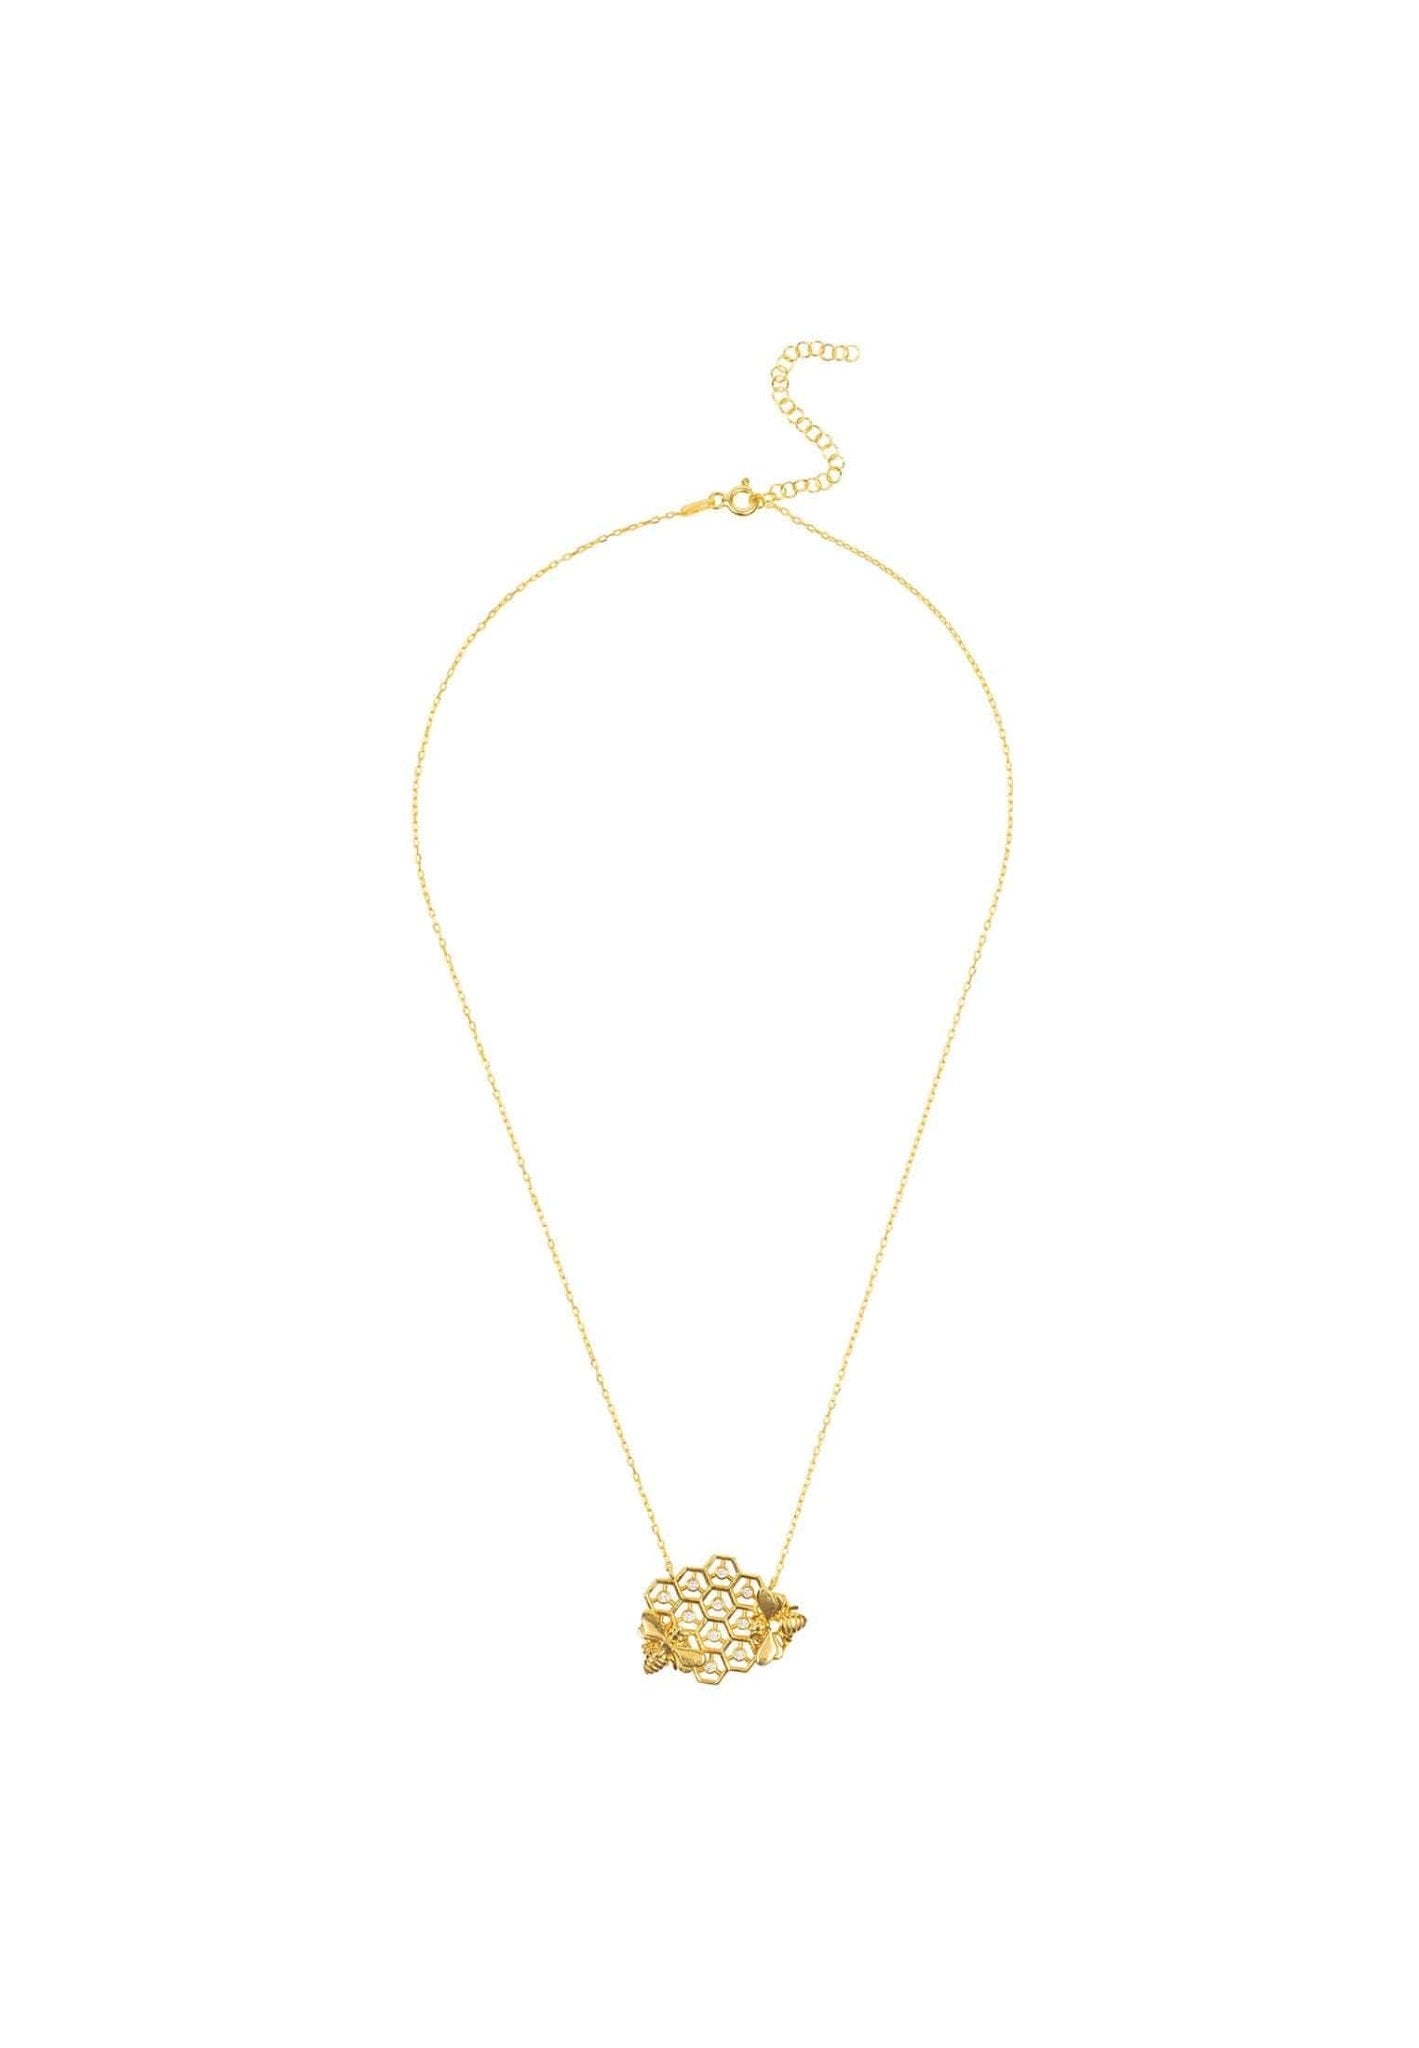 Queen Bee Honey Comb Necklace Gold - LATELITA Necklaces